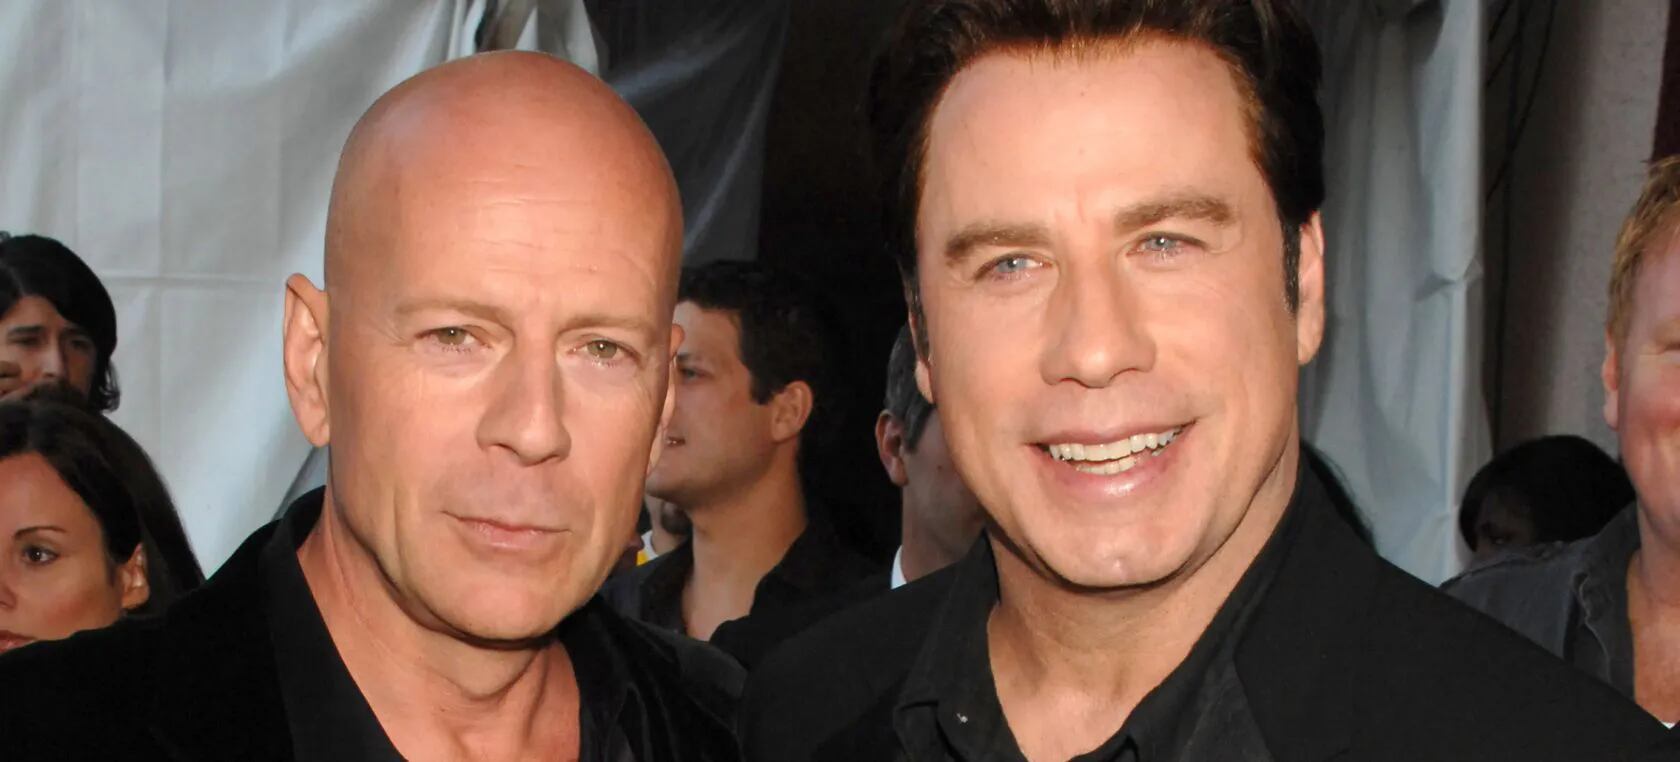 El conmovedor mensaje de John Travolta a Bruce Willis tras anunciar que padece afasia: "Alma generosa"